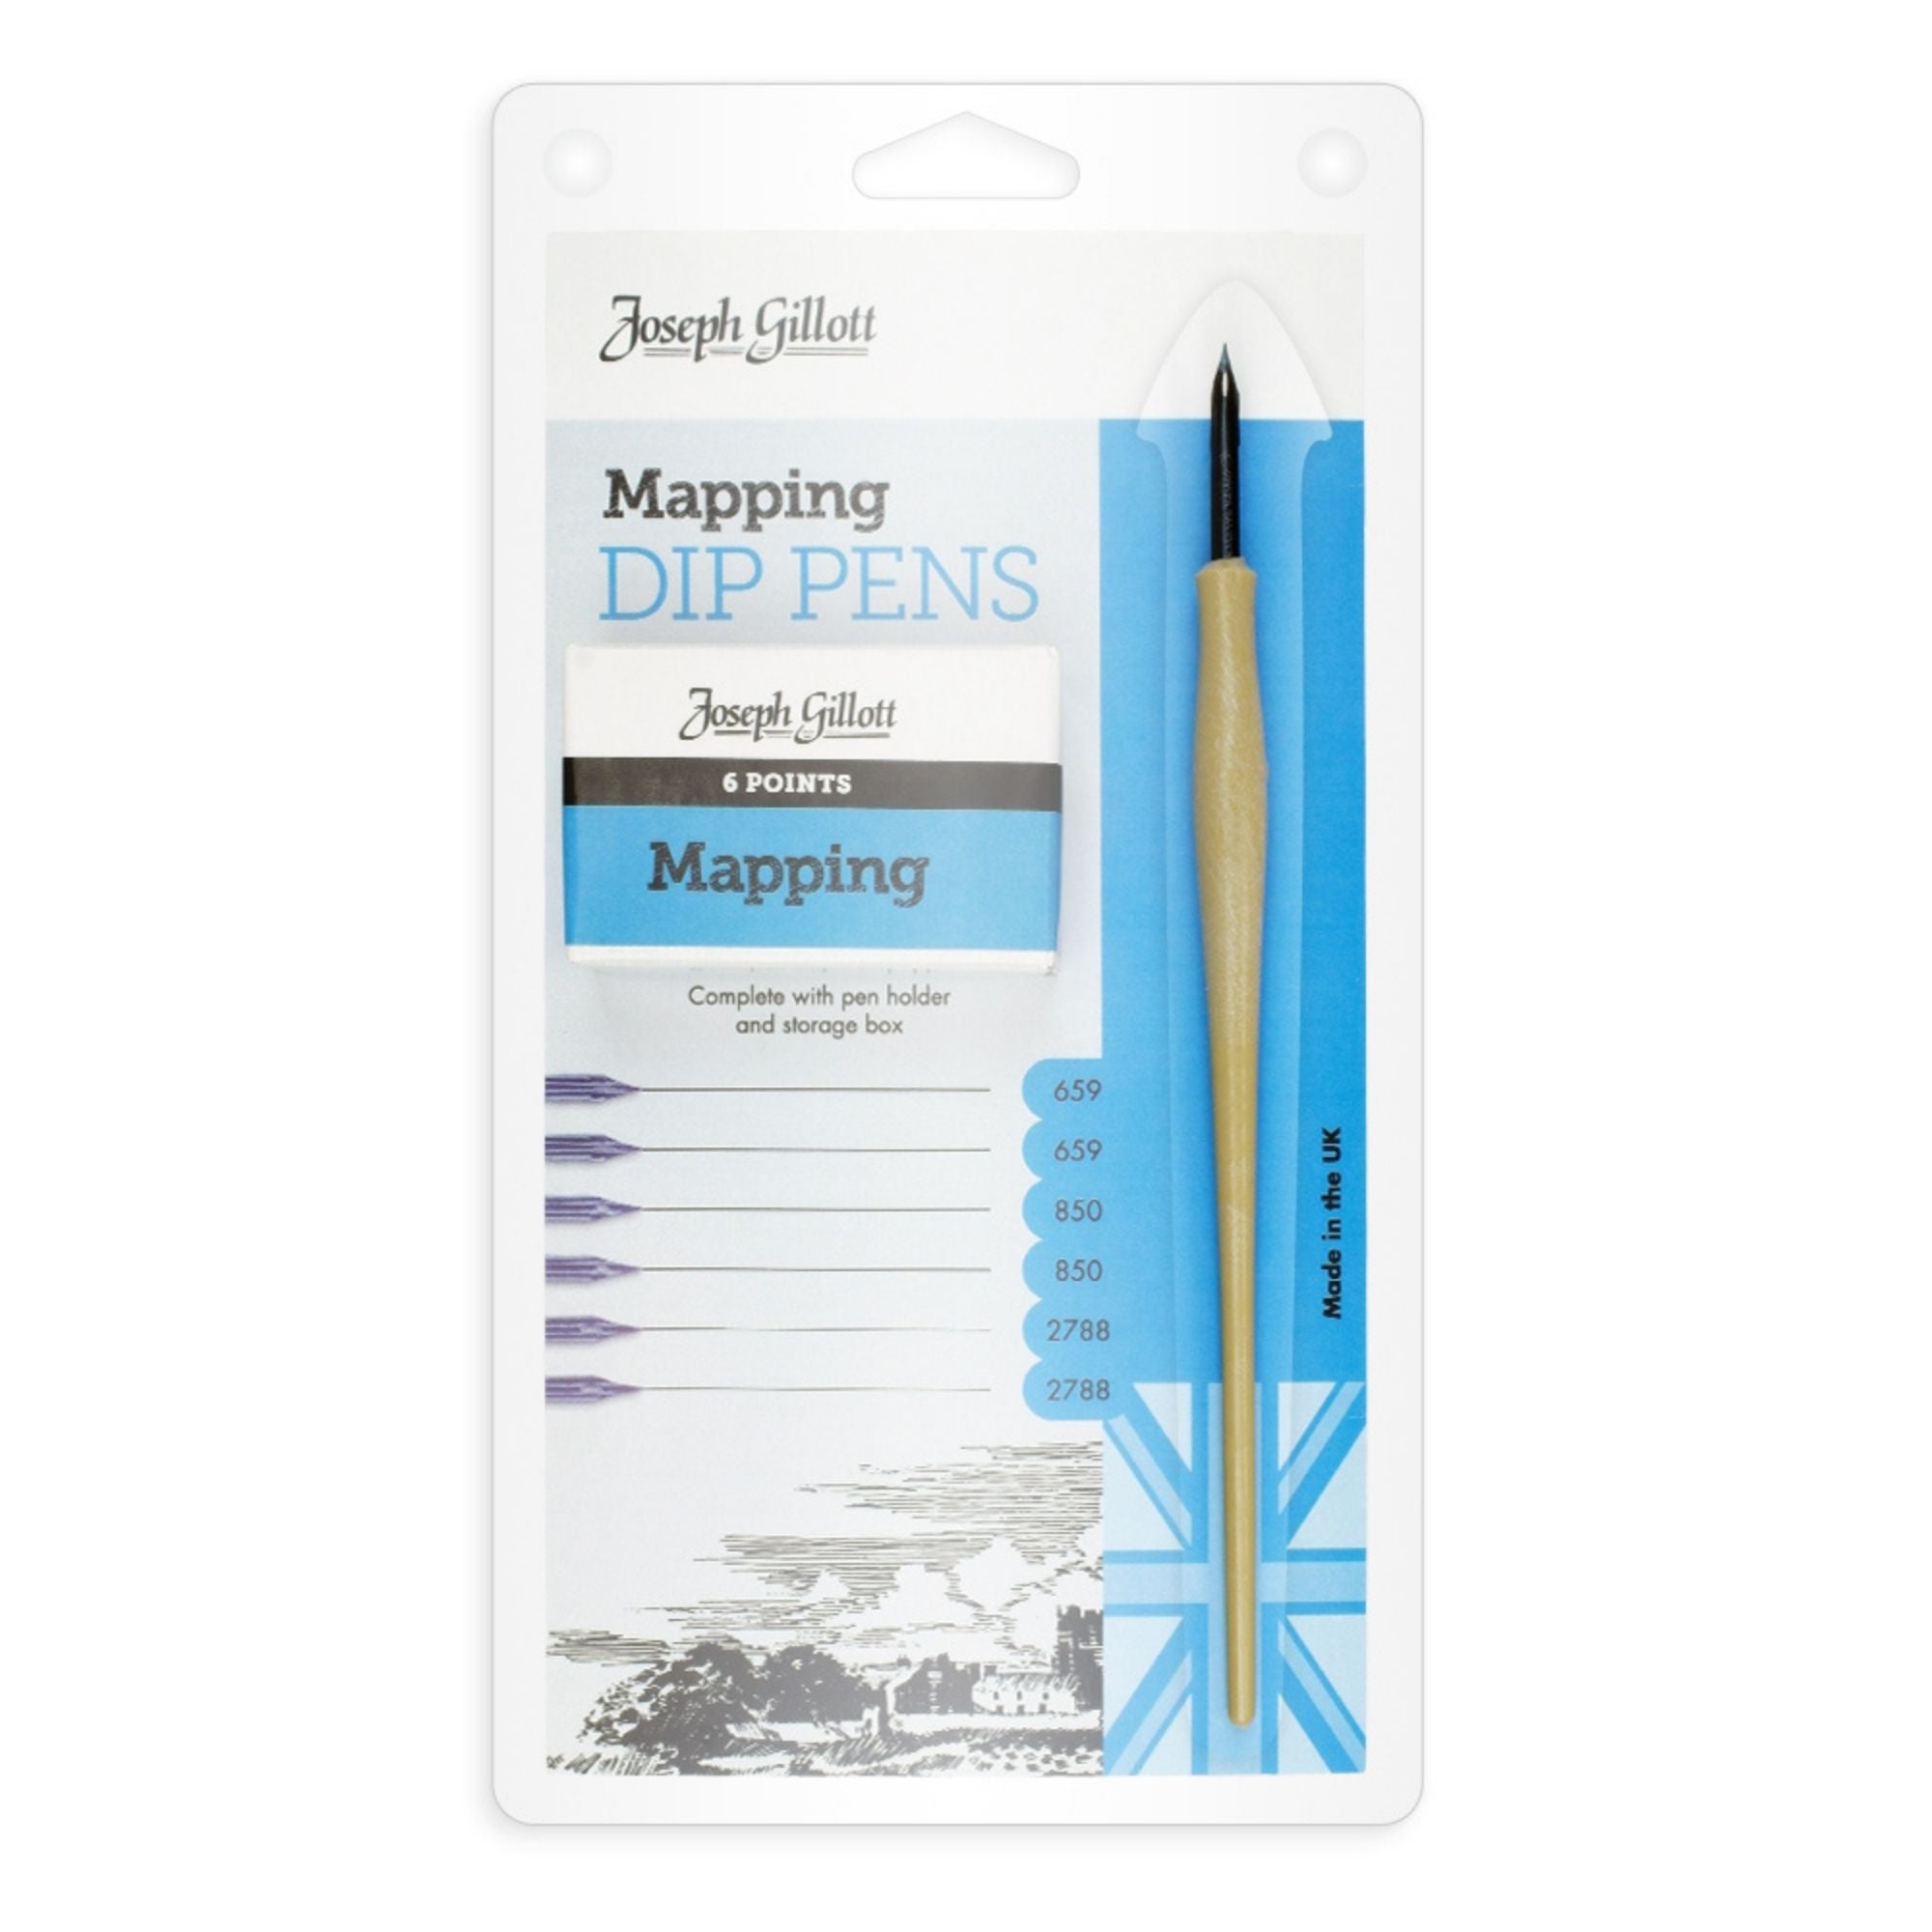 Joseph Gillott Mapping Dip Pens